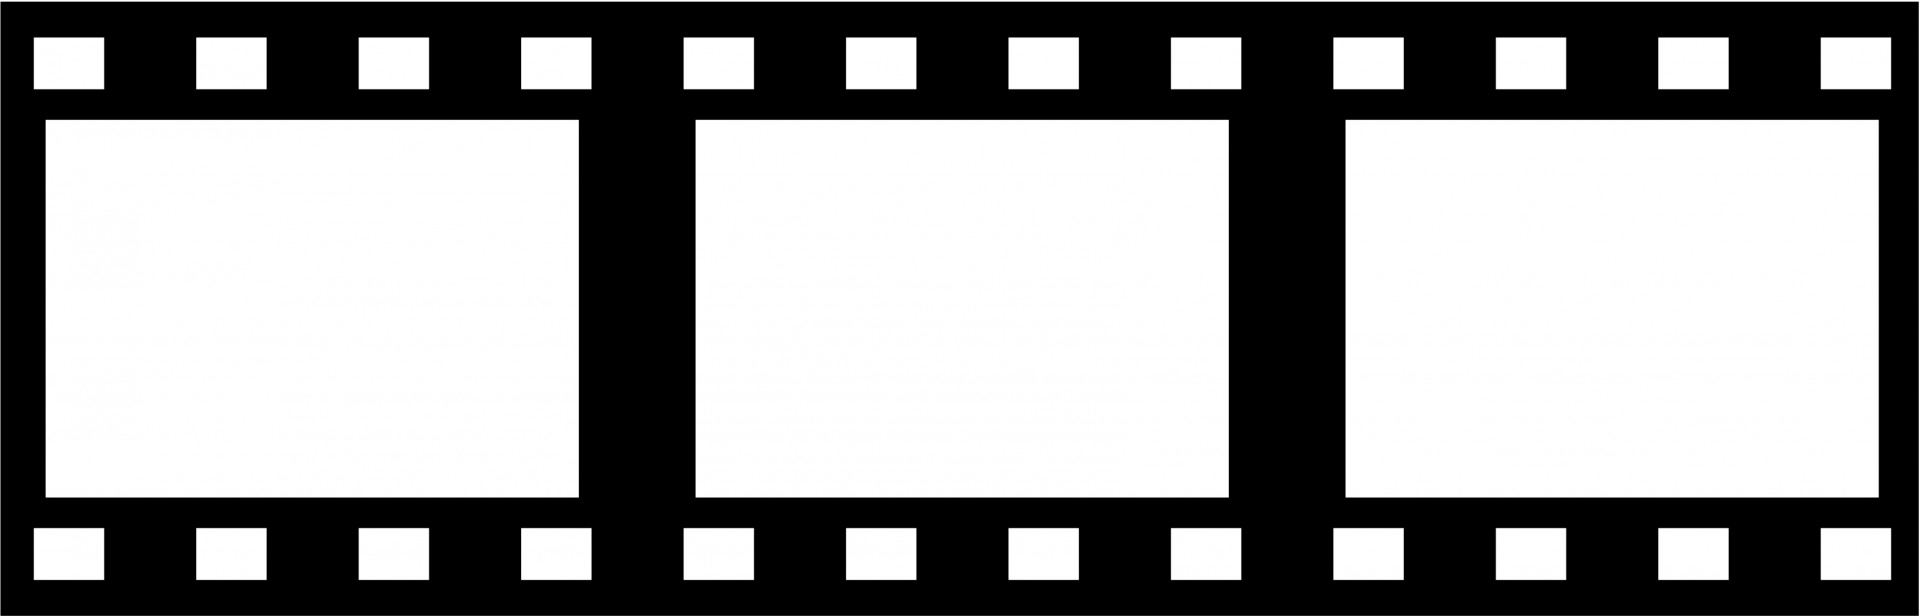 Free vector film strip freevectors clip art image 